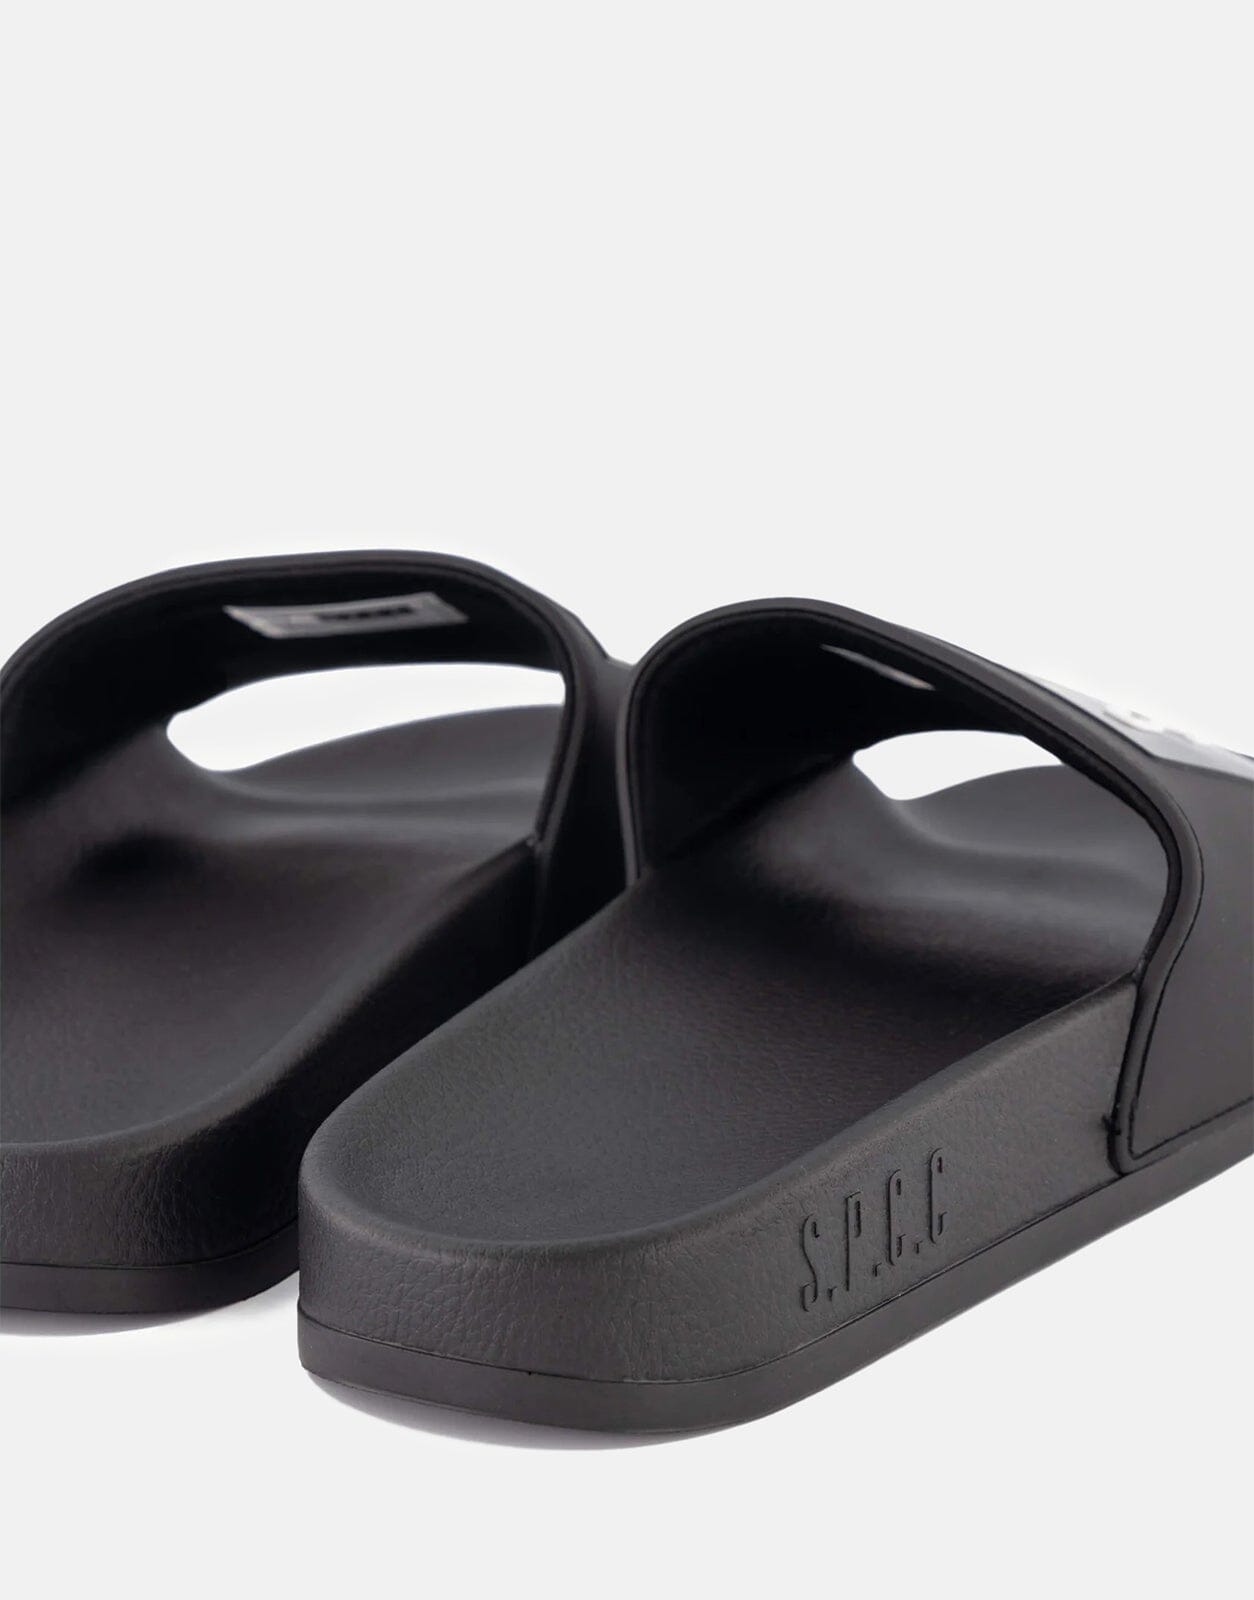 SPCC Matlock Black Slides - Subwear